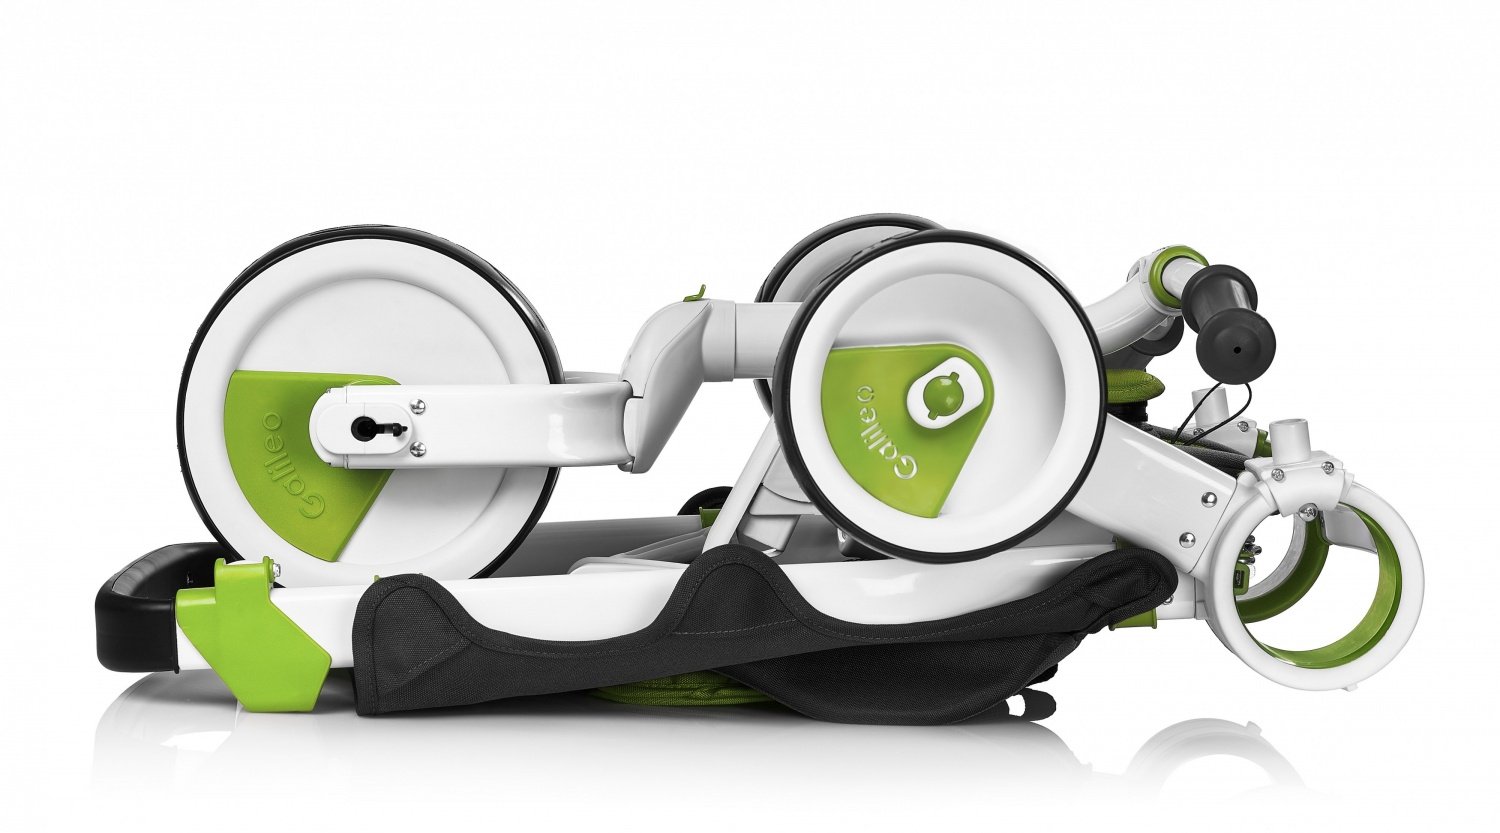 Трехколесный велосипед Galileo STROLLCYCLE зеленый (G-1001-G) фото 